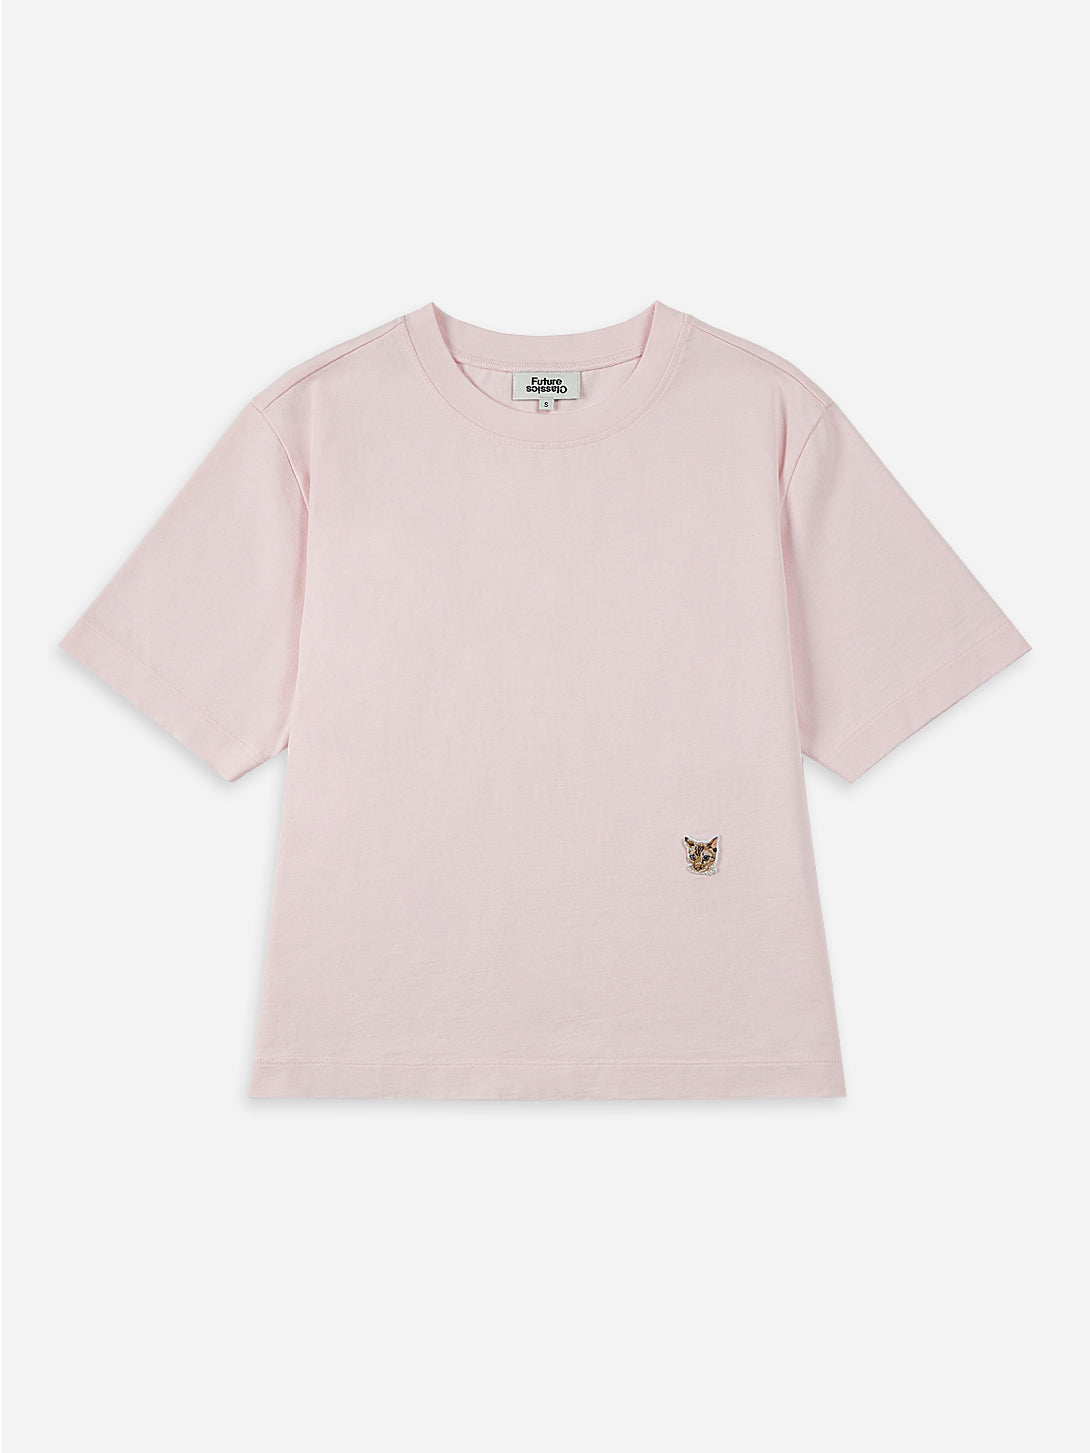 Blushing Pink Nova Boxy Tee Relaxed Fit Shirt